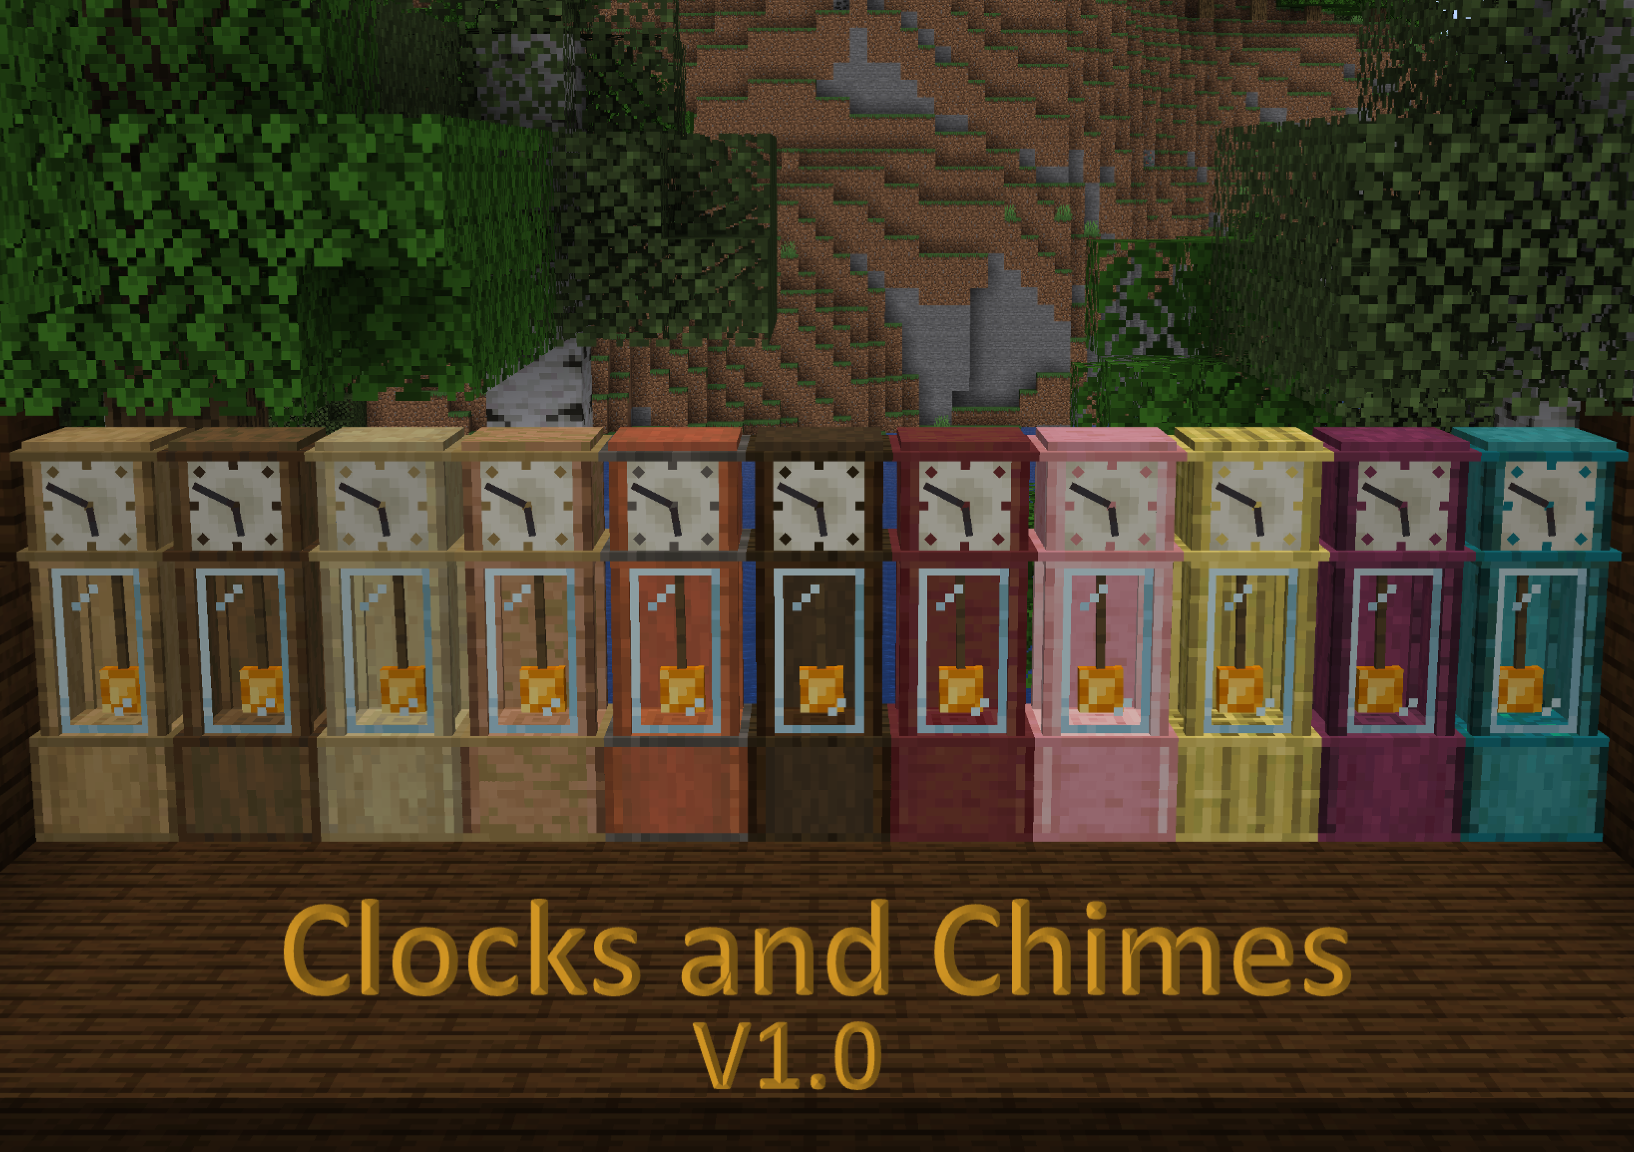 Clocks and Chimes V1.0